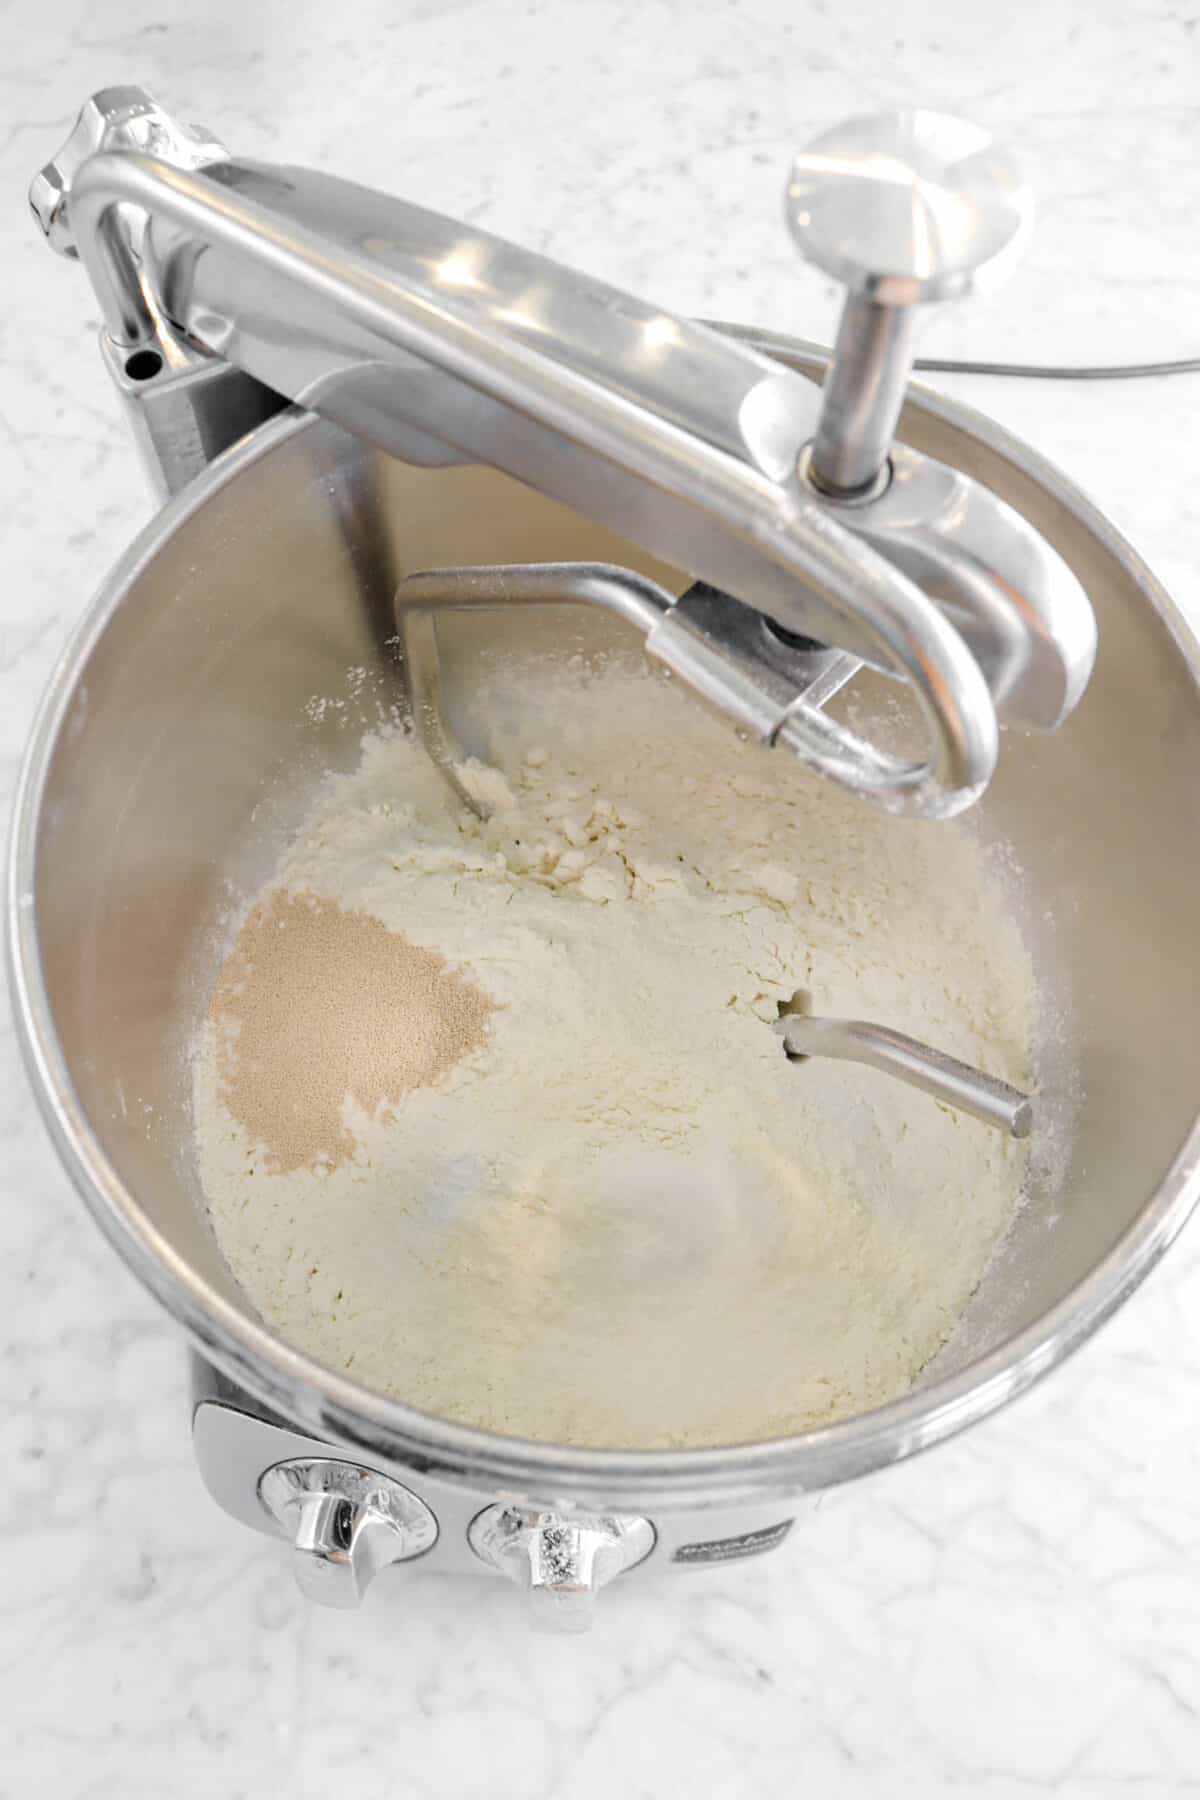 flour, yeast, and salt in mixer